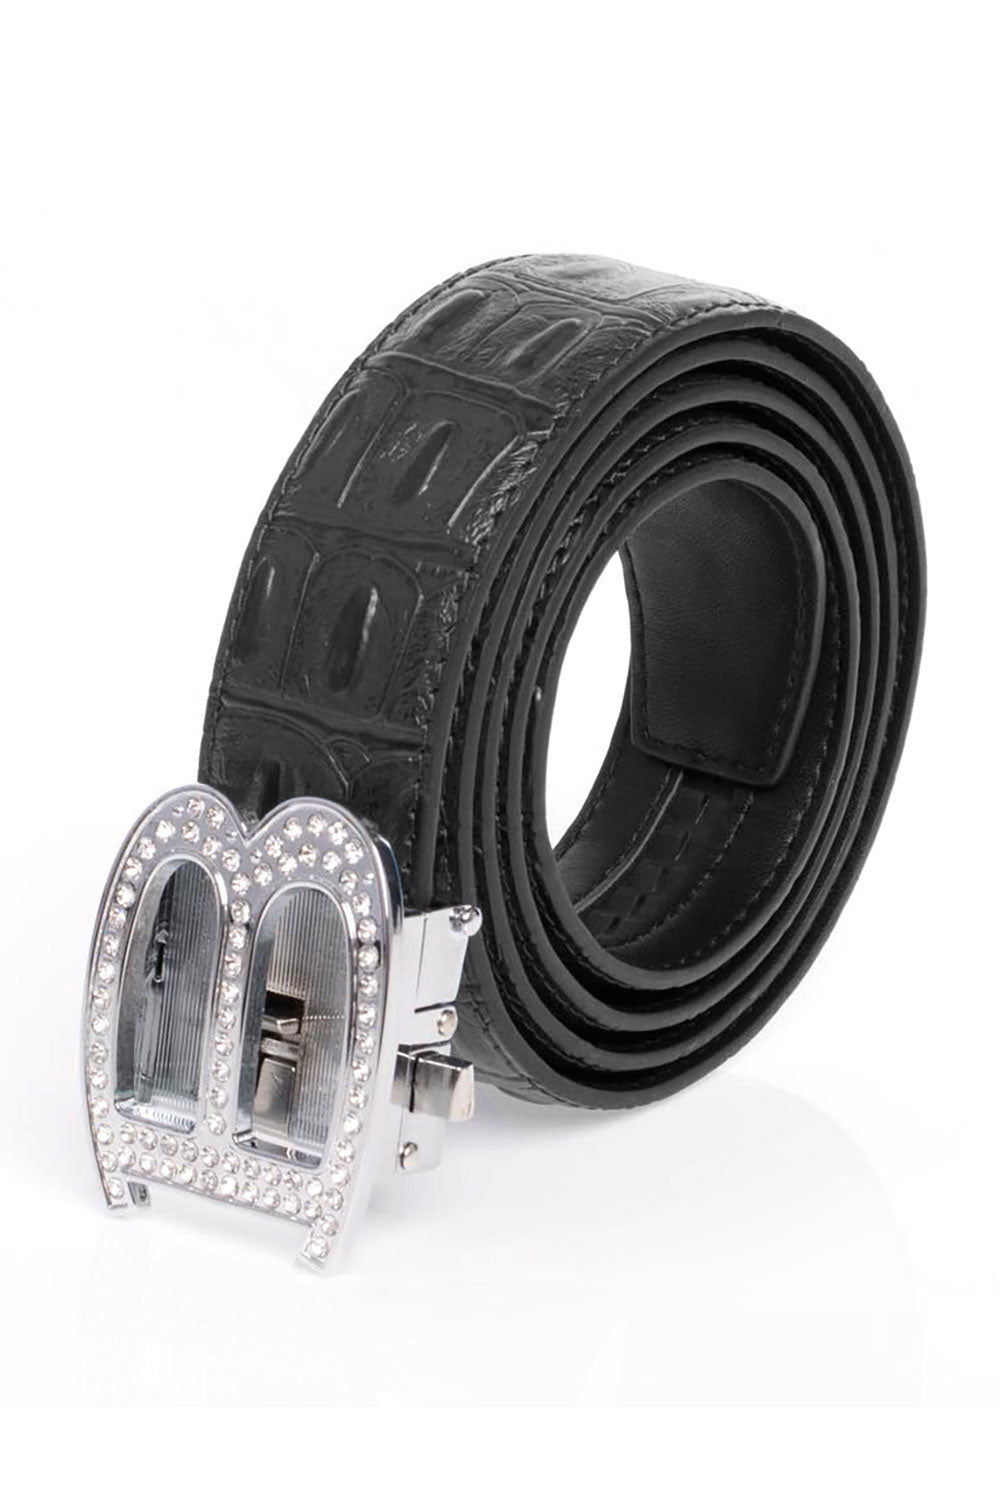 Barabas "B" Shiny Silver/Black Croc Adjustable Luxury Leather Dress Belt